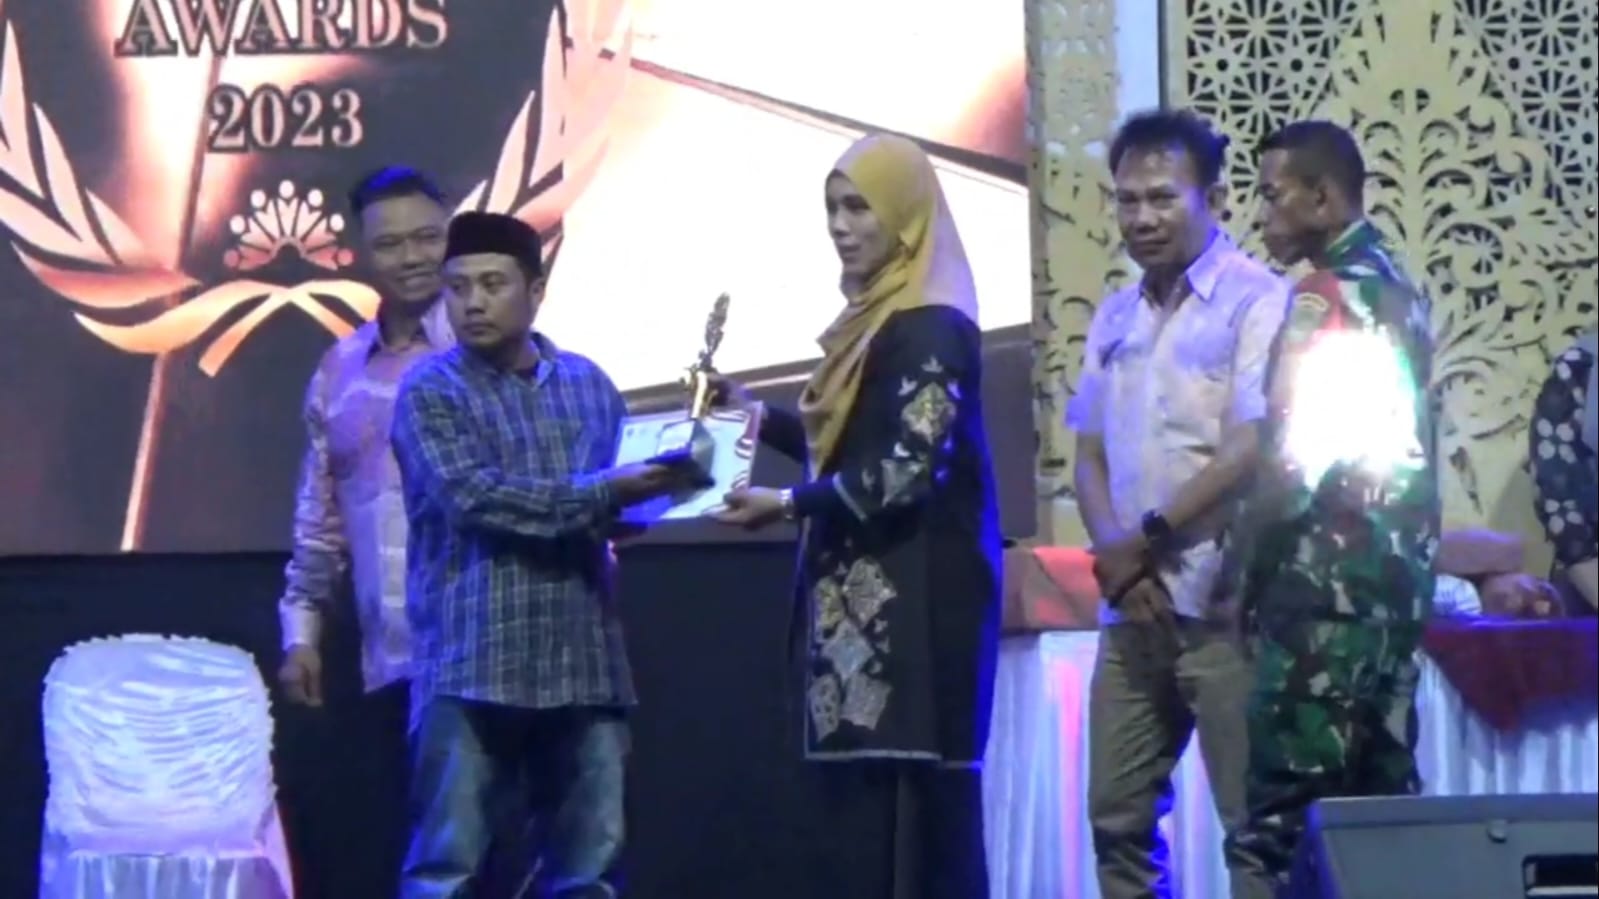 Sumedang Selatan Gelar Malam Anugerah Sultan Awards 2023, JurnalSuma